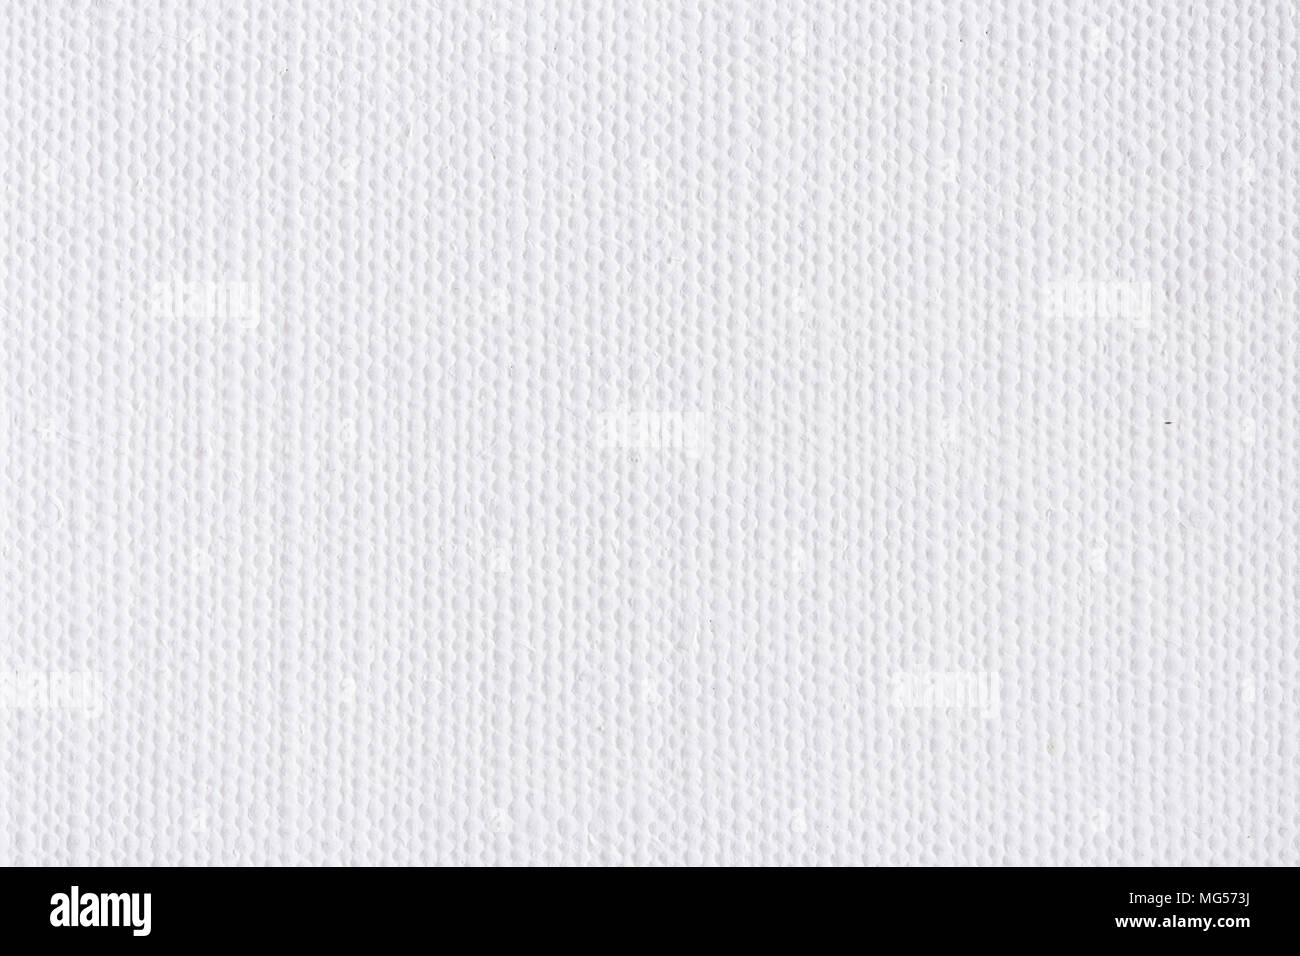 Textura de fondo de lienzo blanco en blanco